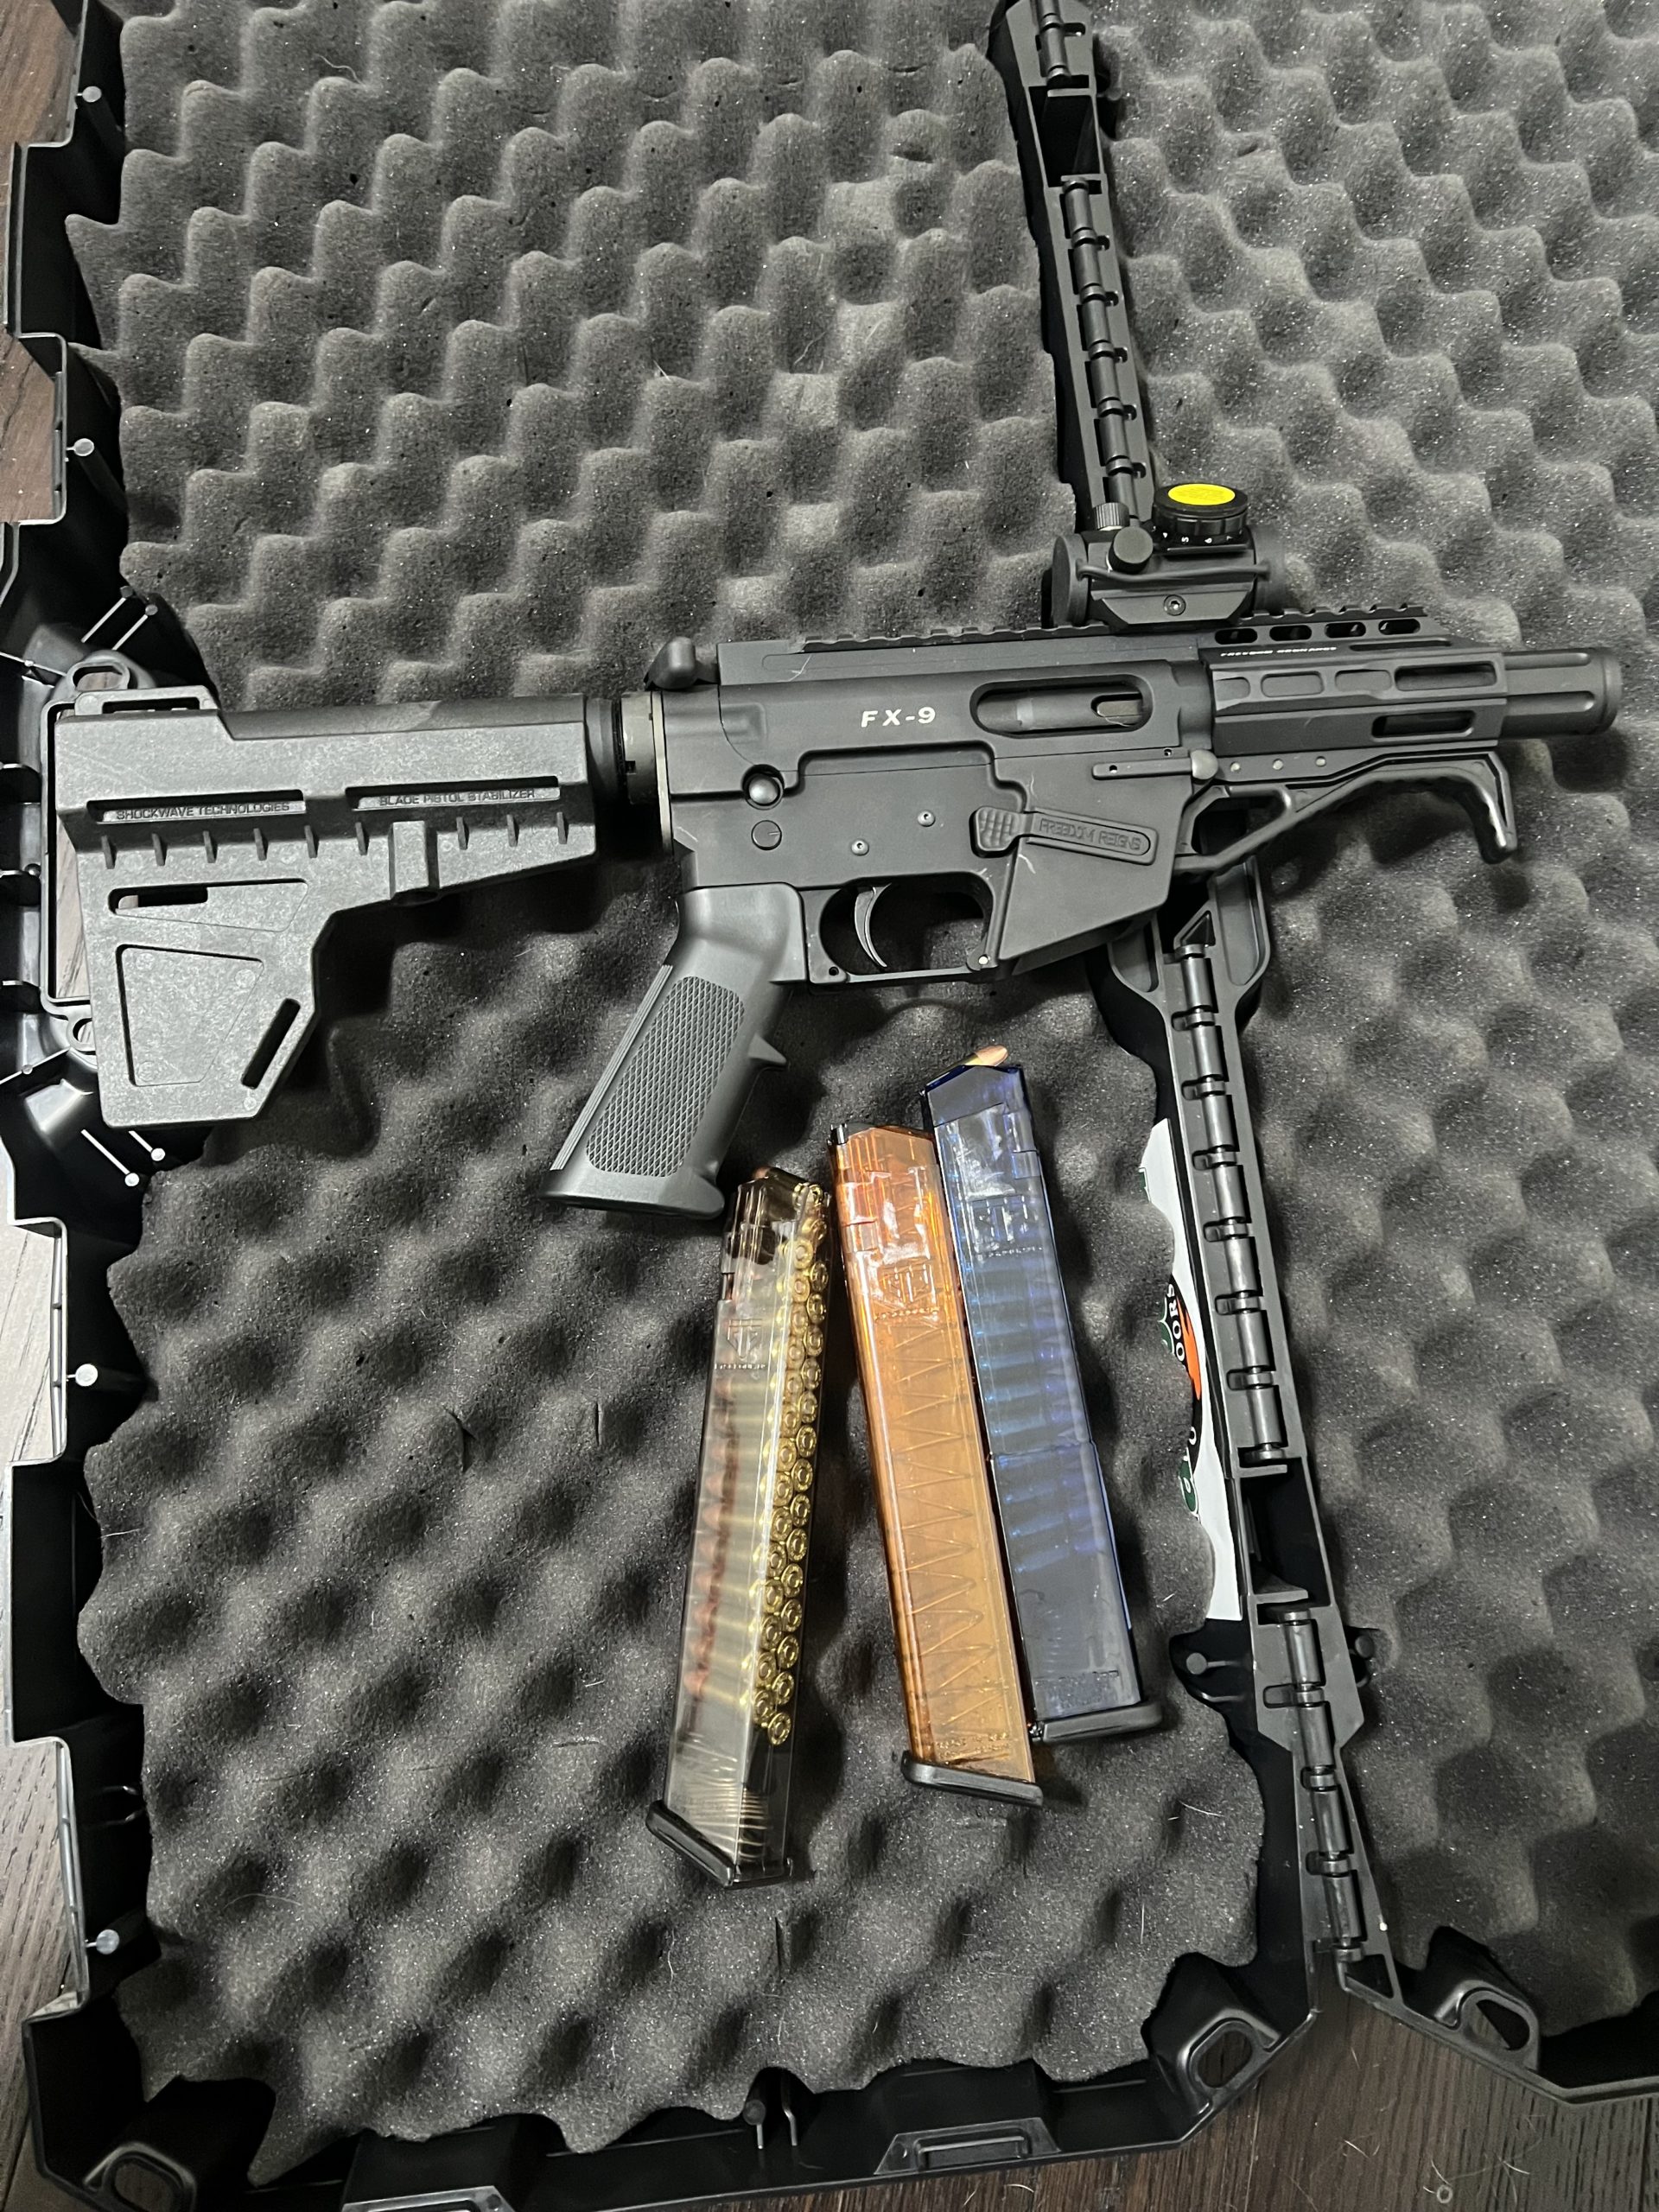 Freedom Ordnance FX-9 AR pistol for sale.